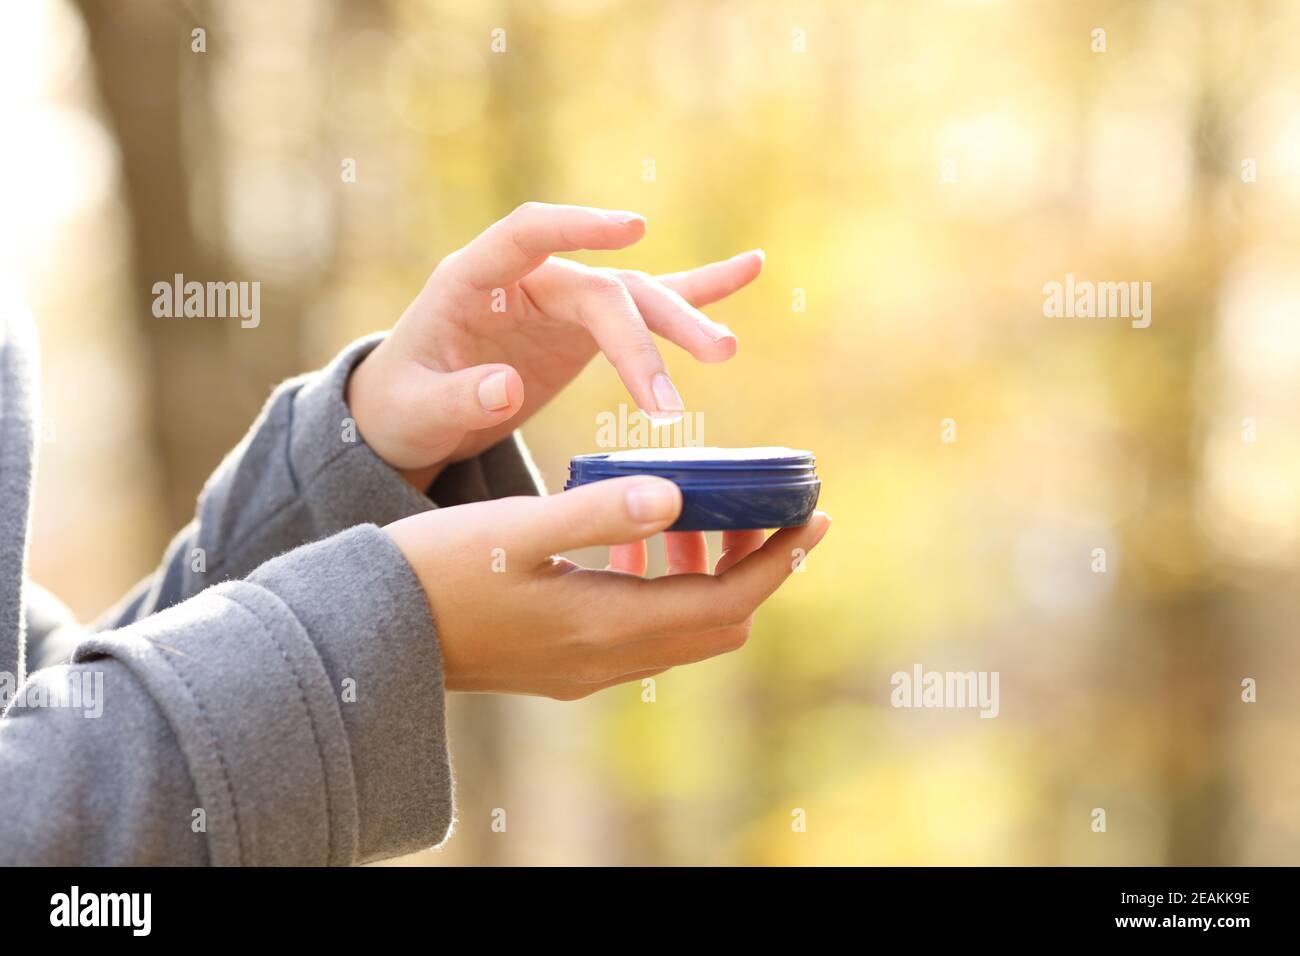 Woman hand holding moisturizer cream bottle in fall Stock Photo